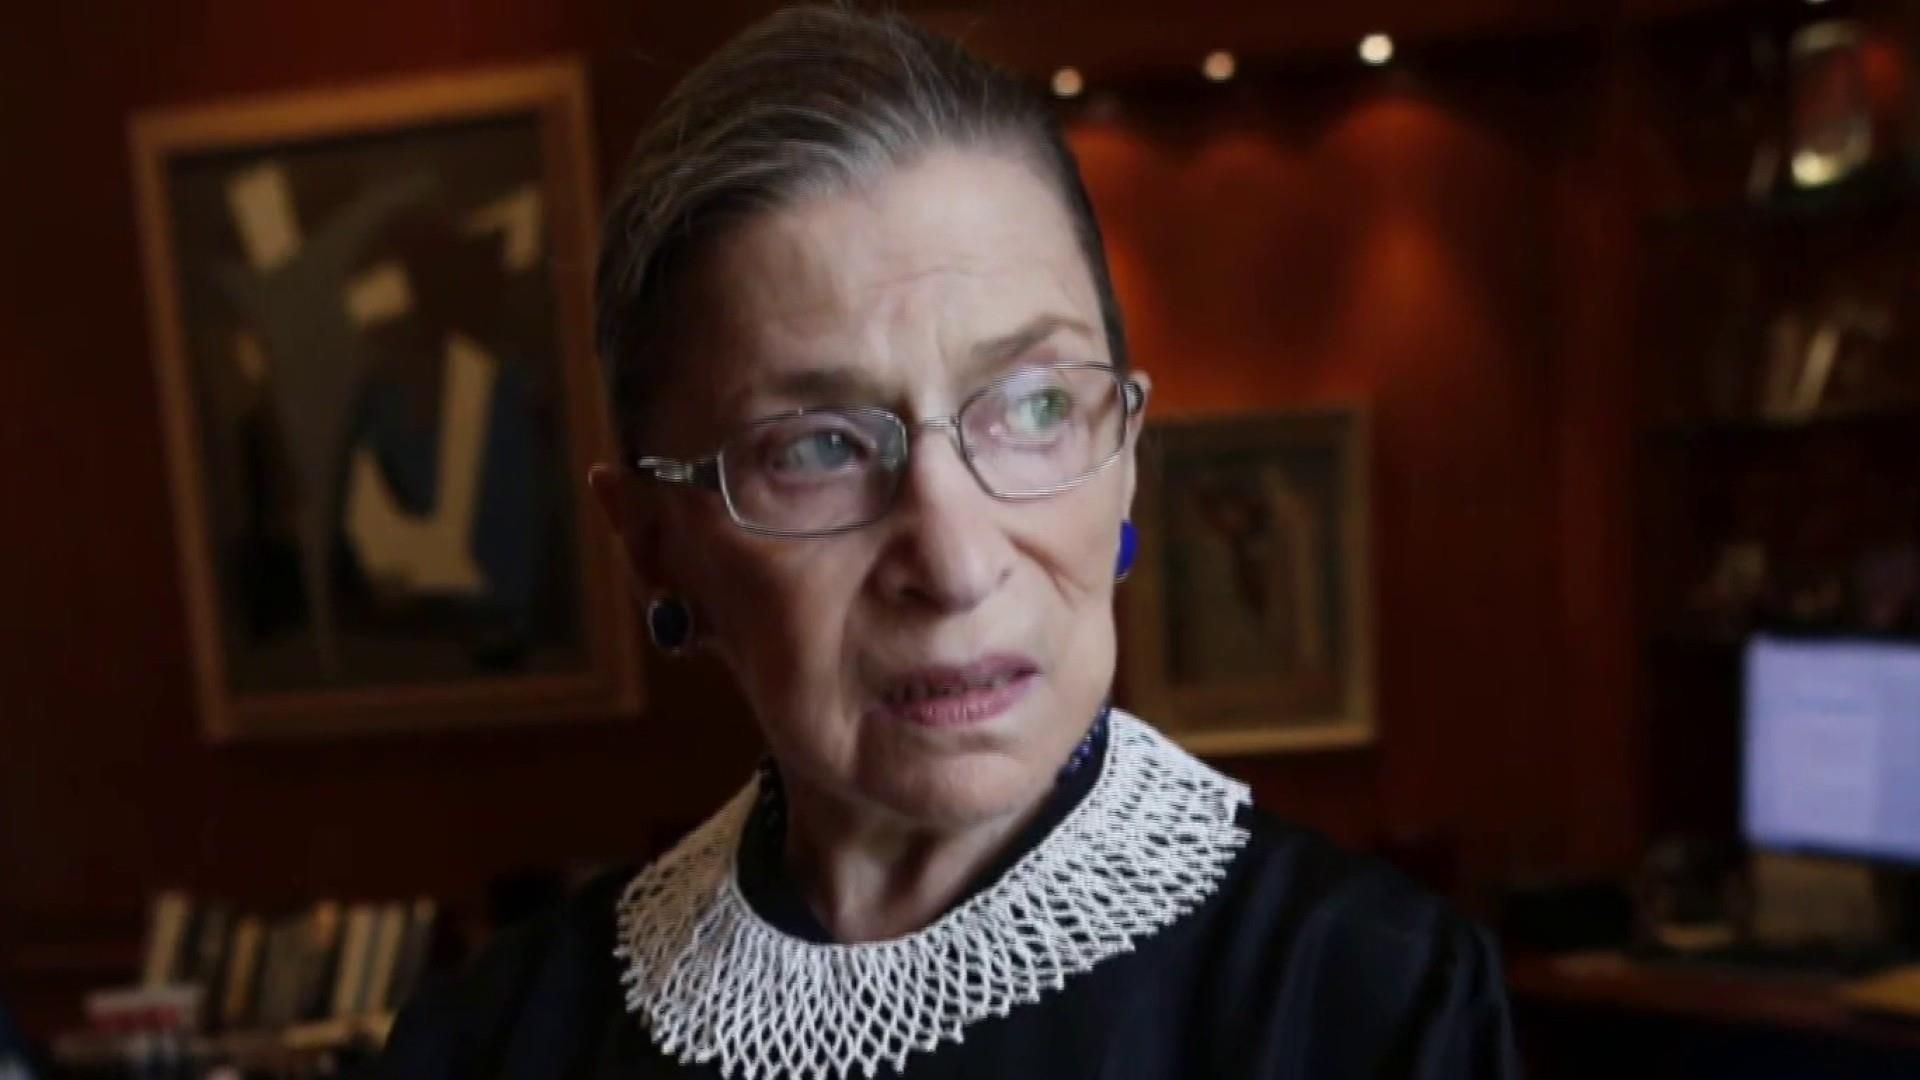 Fall that broke Ruth Bader Ginsburg's ribs may have saved Supreme Court justice's life